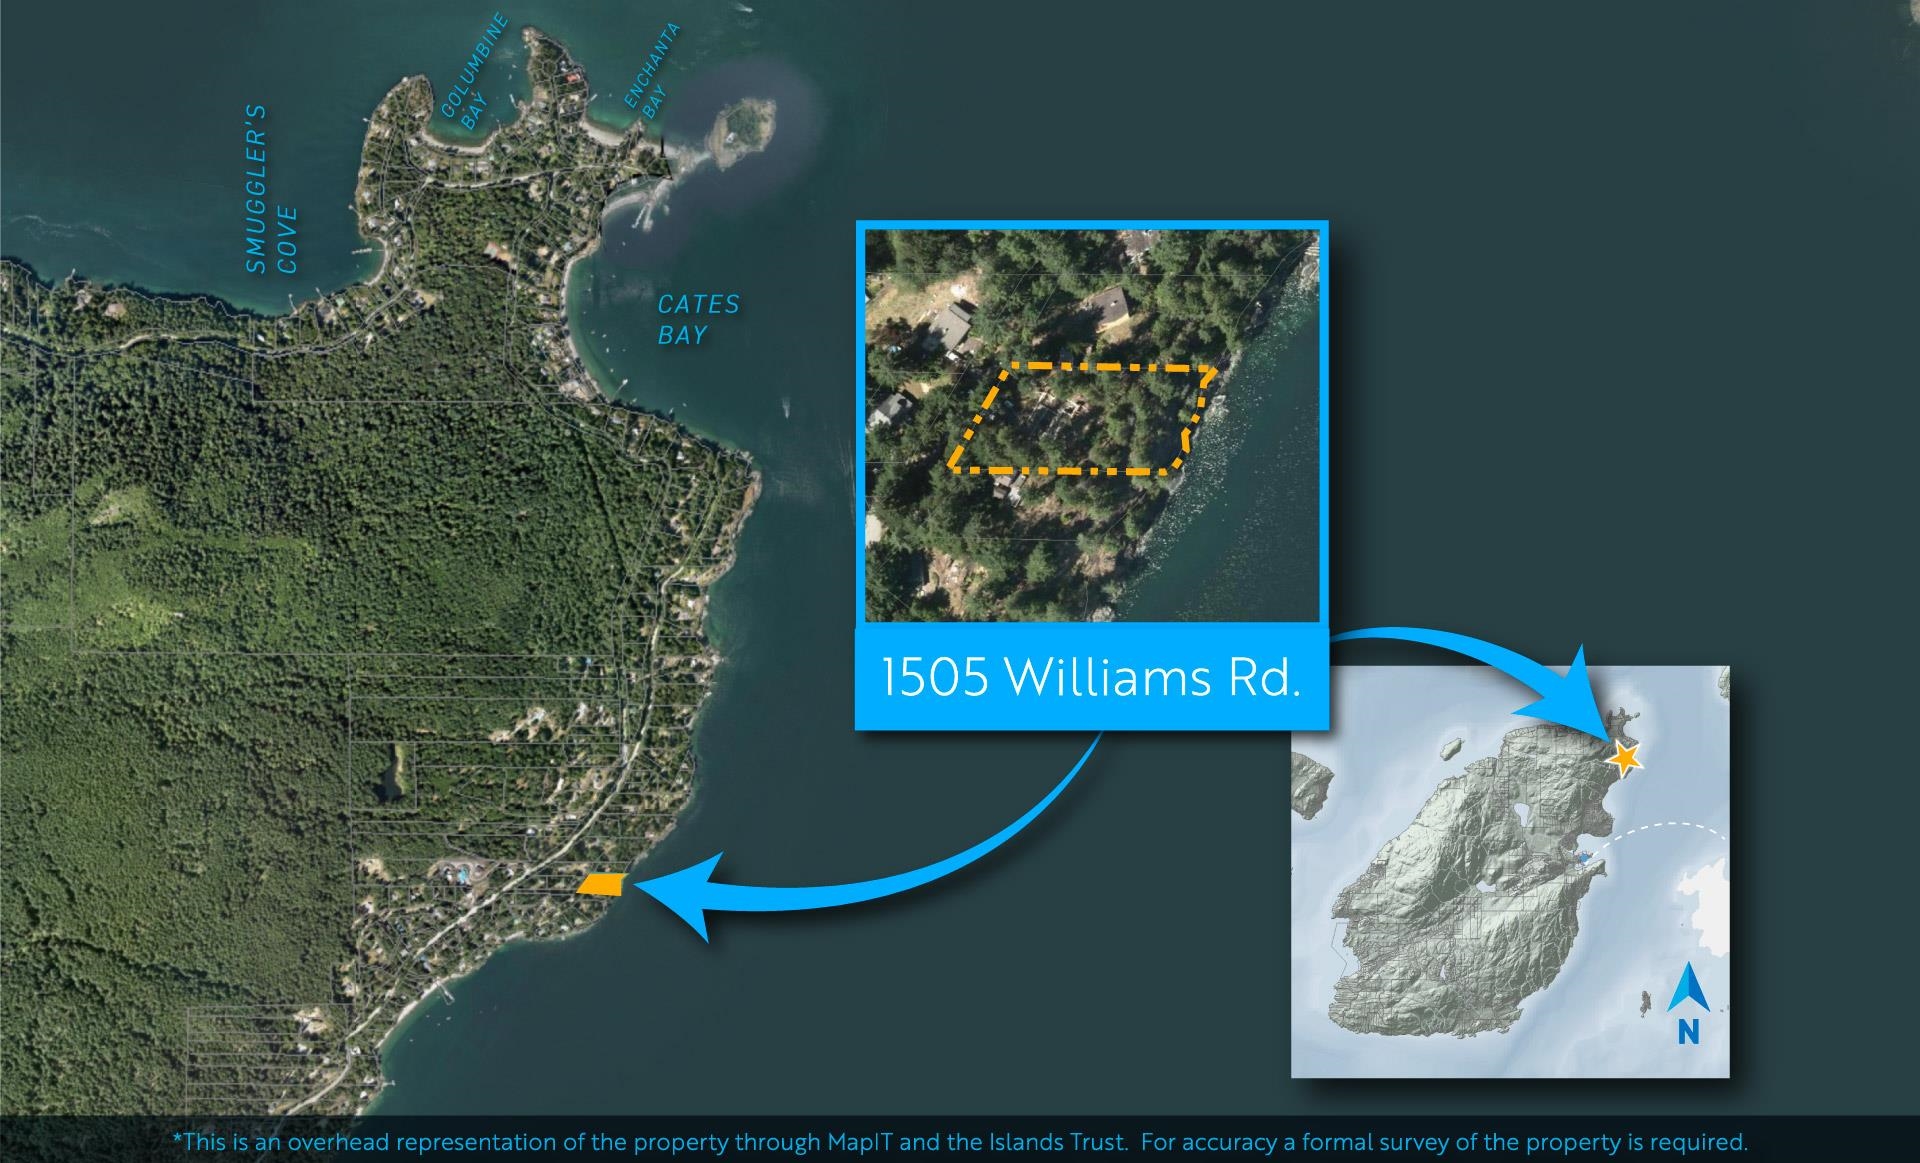 Listing image of 1505 WILLIAMS ROAD